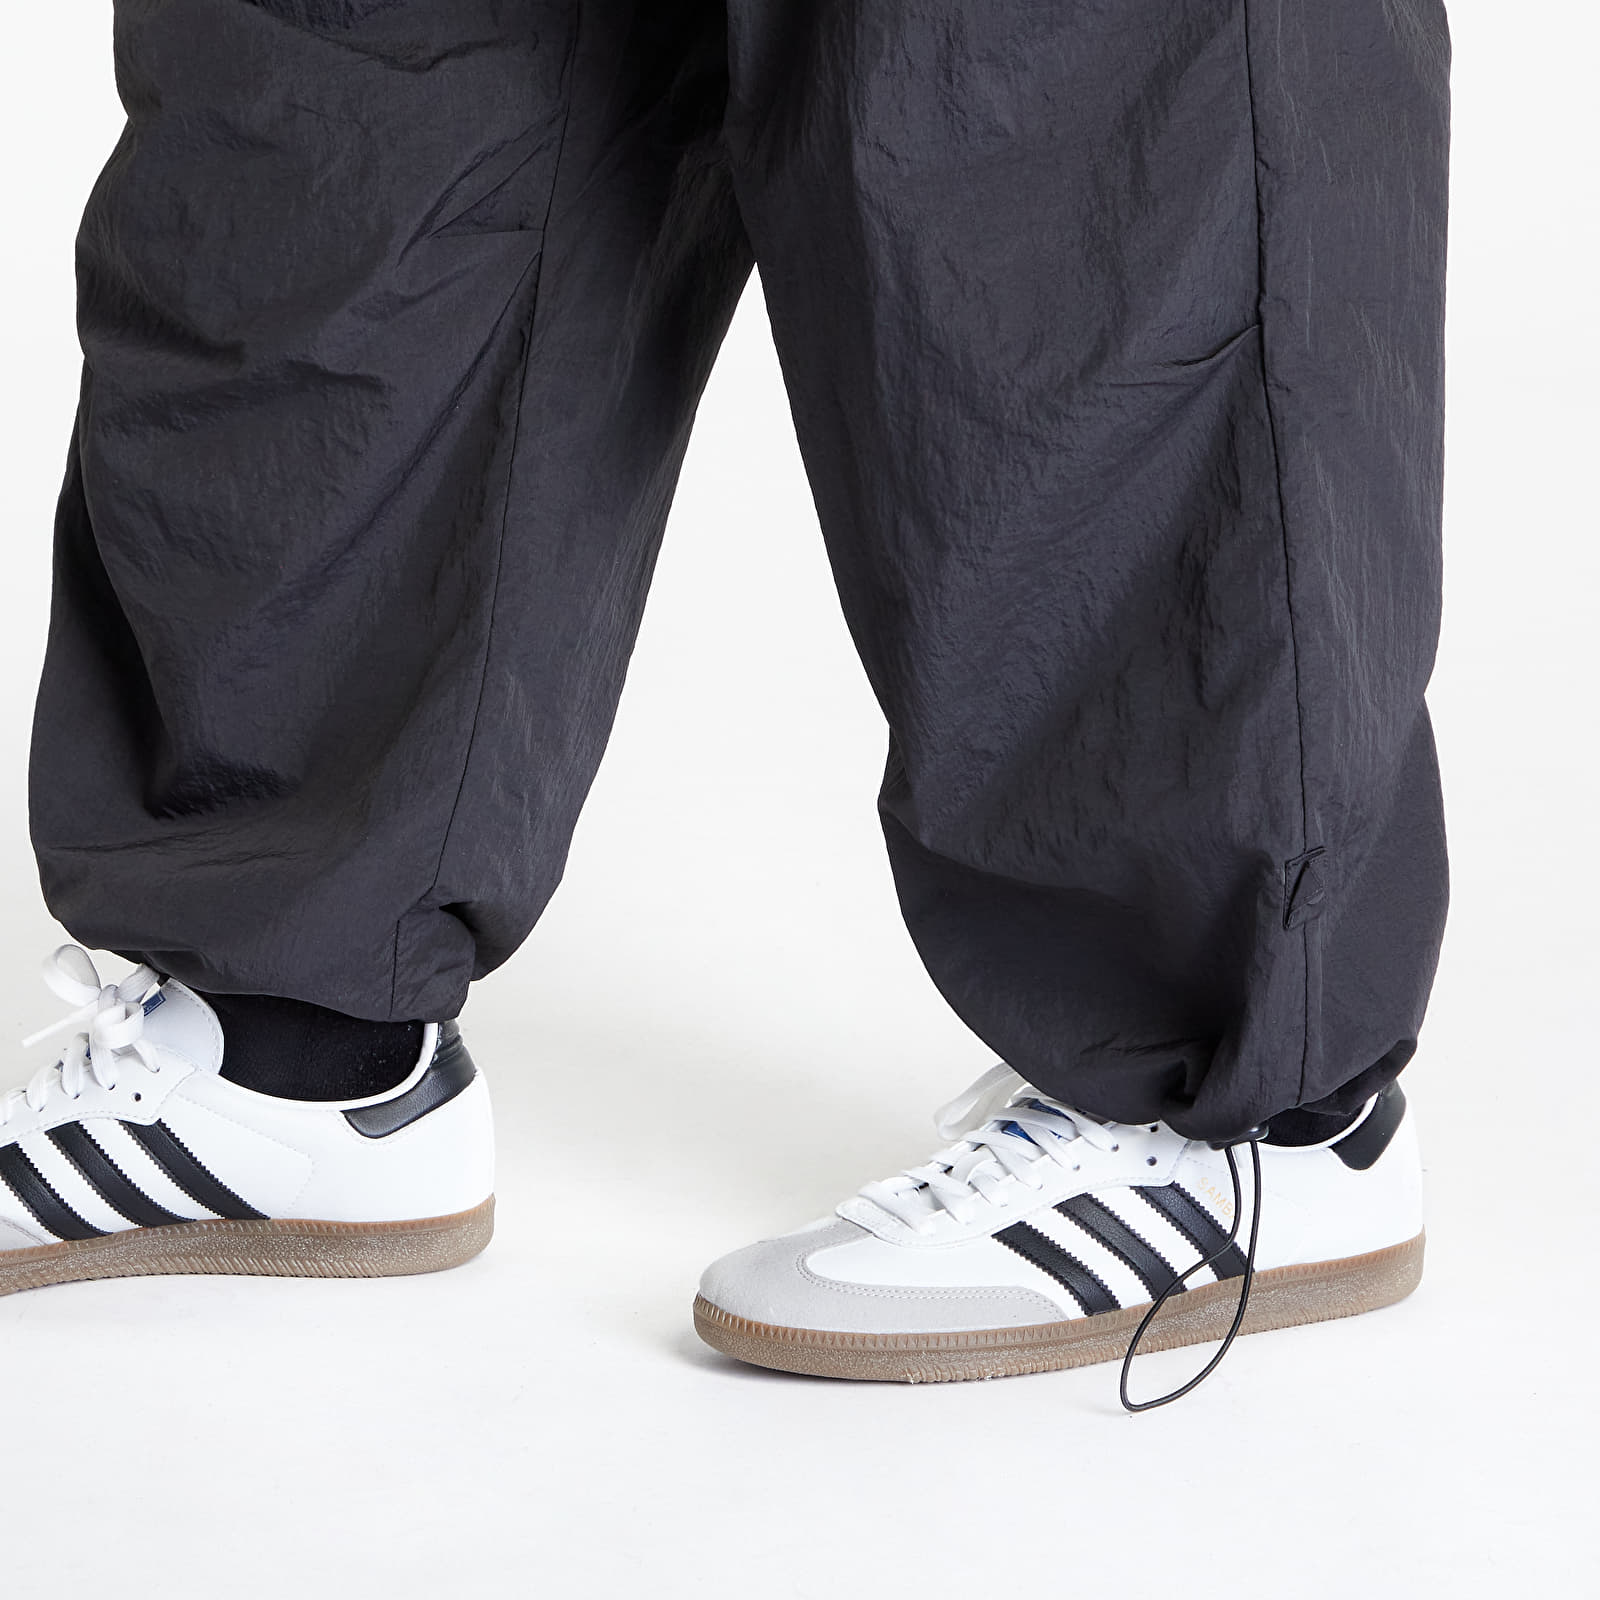 Pants | Urban Parachute Nylon jeans Queens Classics and Pants Black